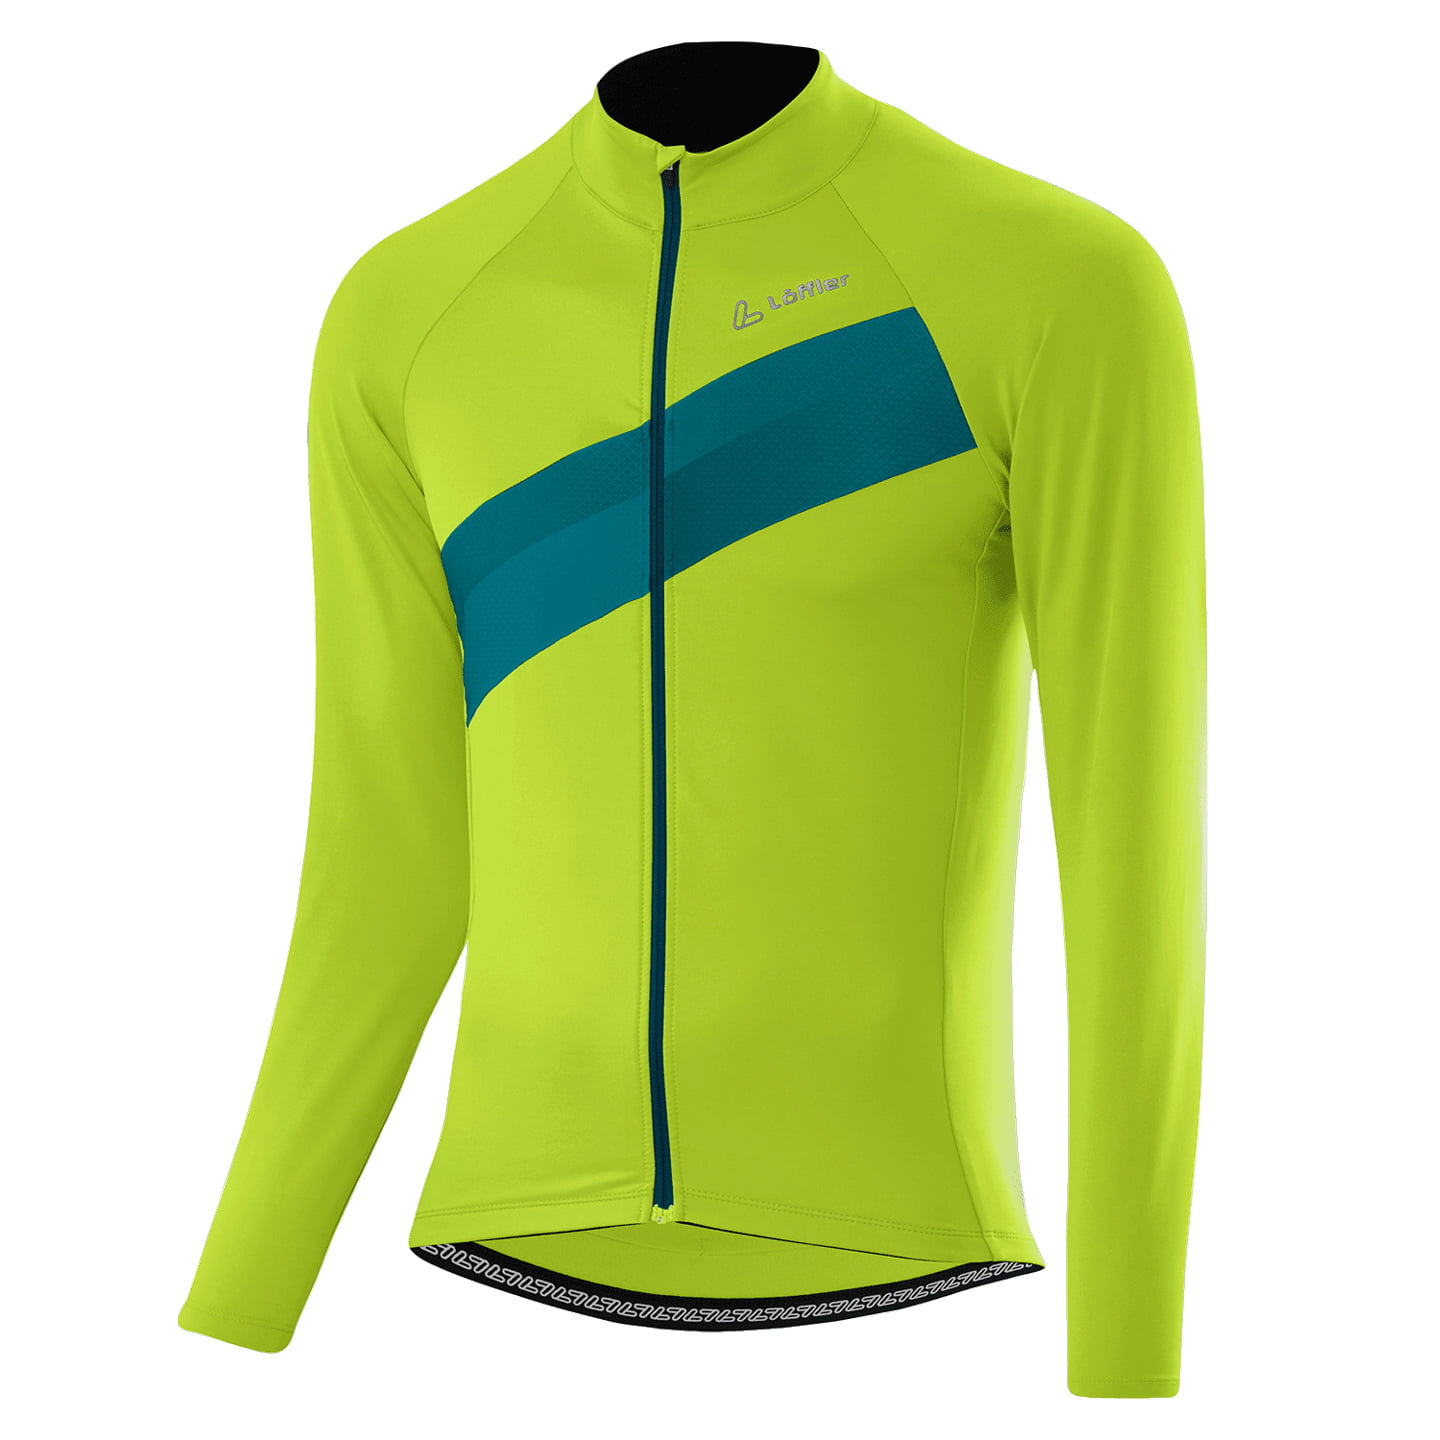 LOFFLER EVO22 Long Sleeve Jersey Long Sleeve Jersey, for men, size L, Cycling jersey, Cycling clothing